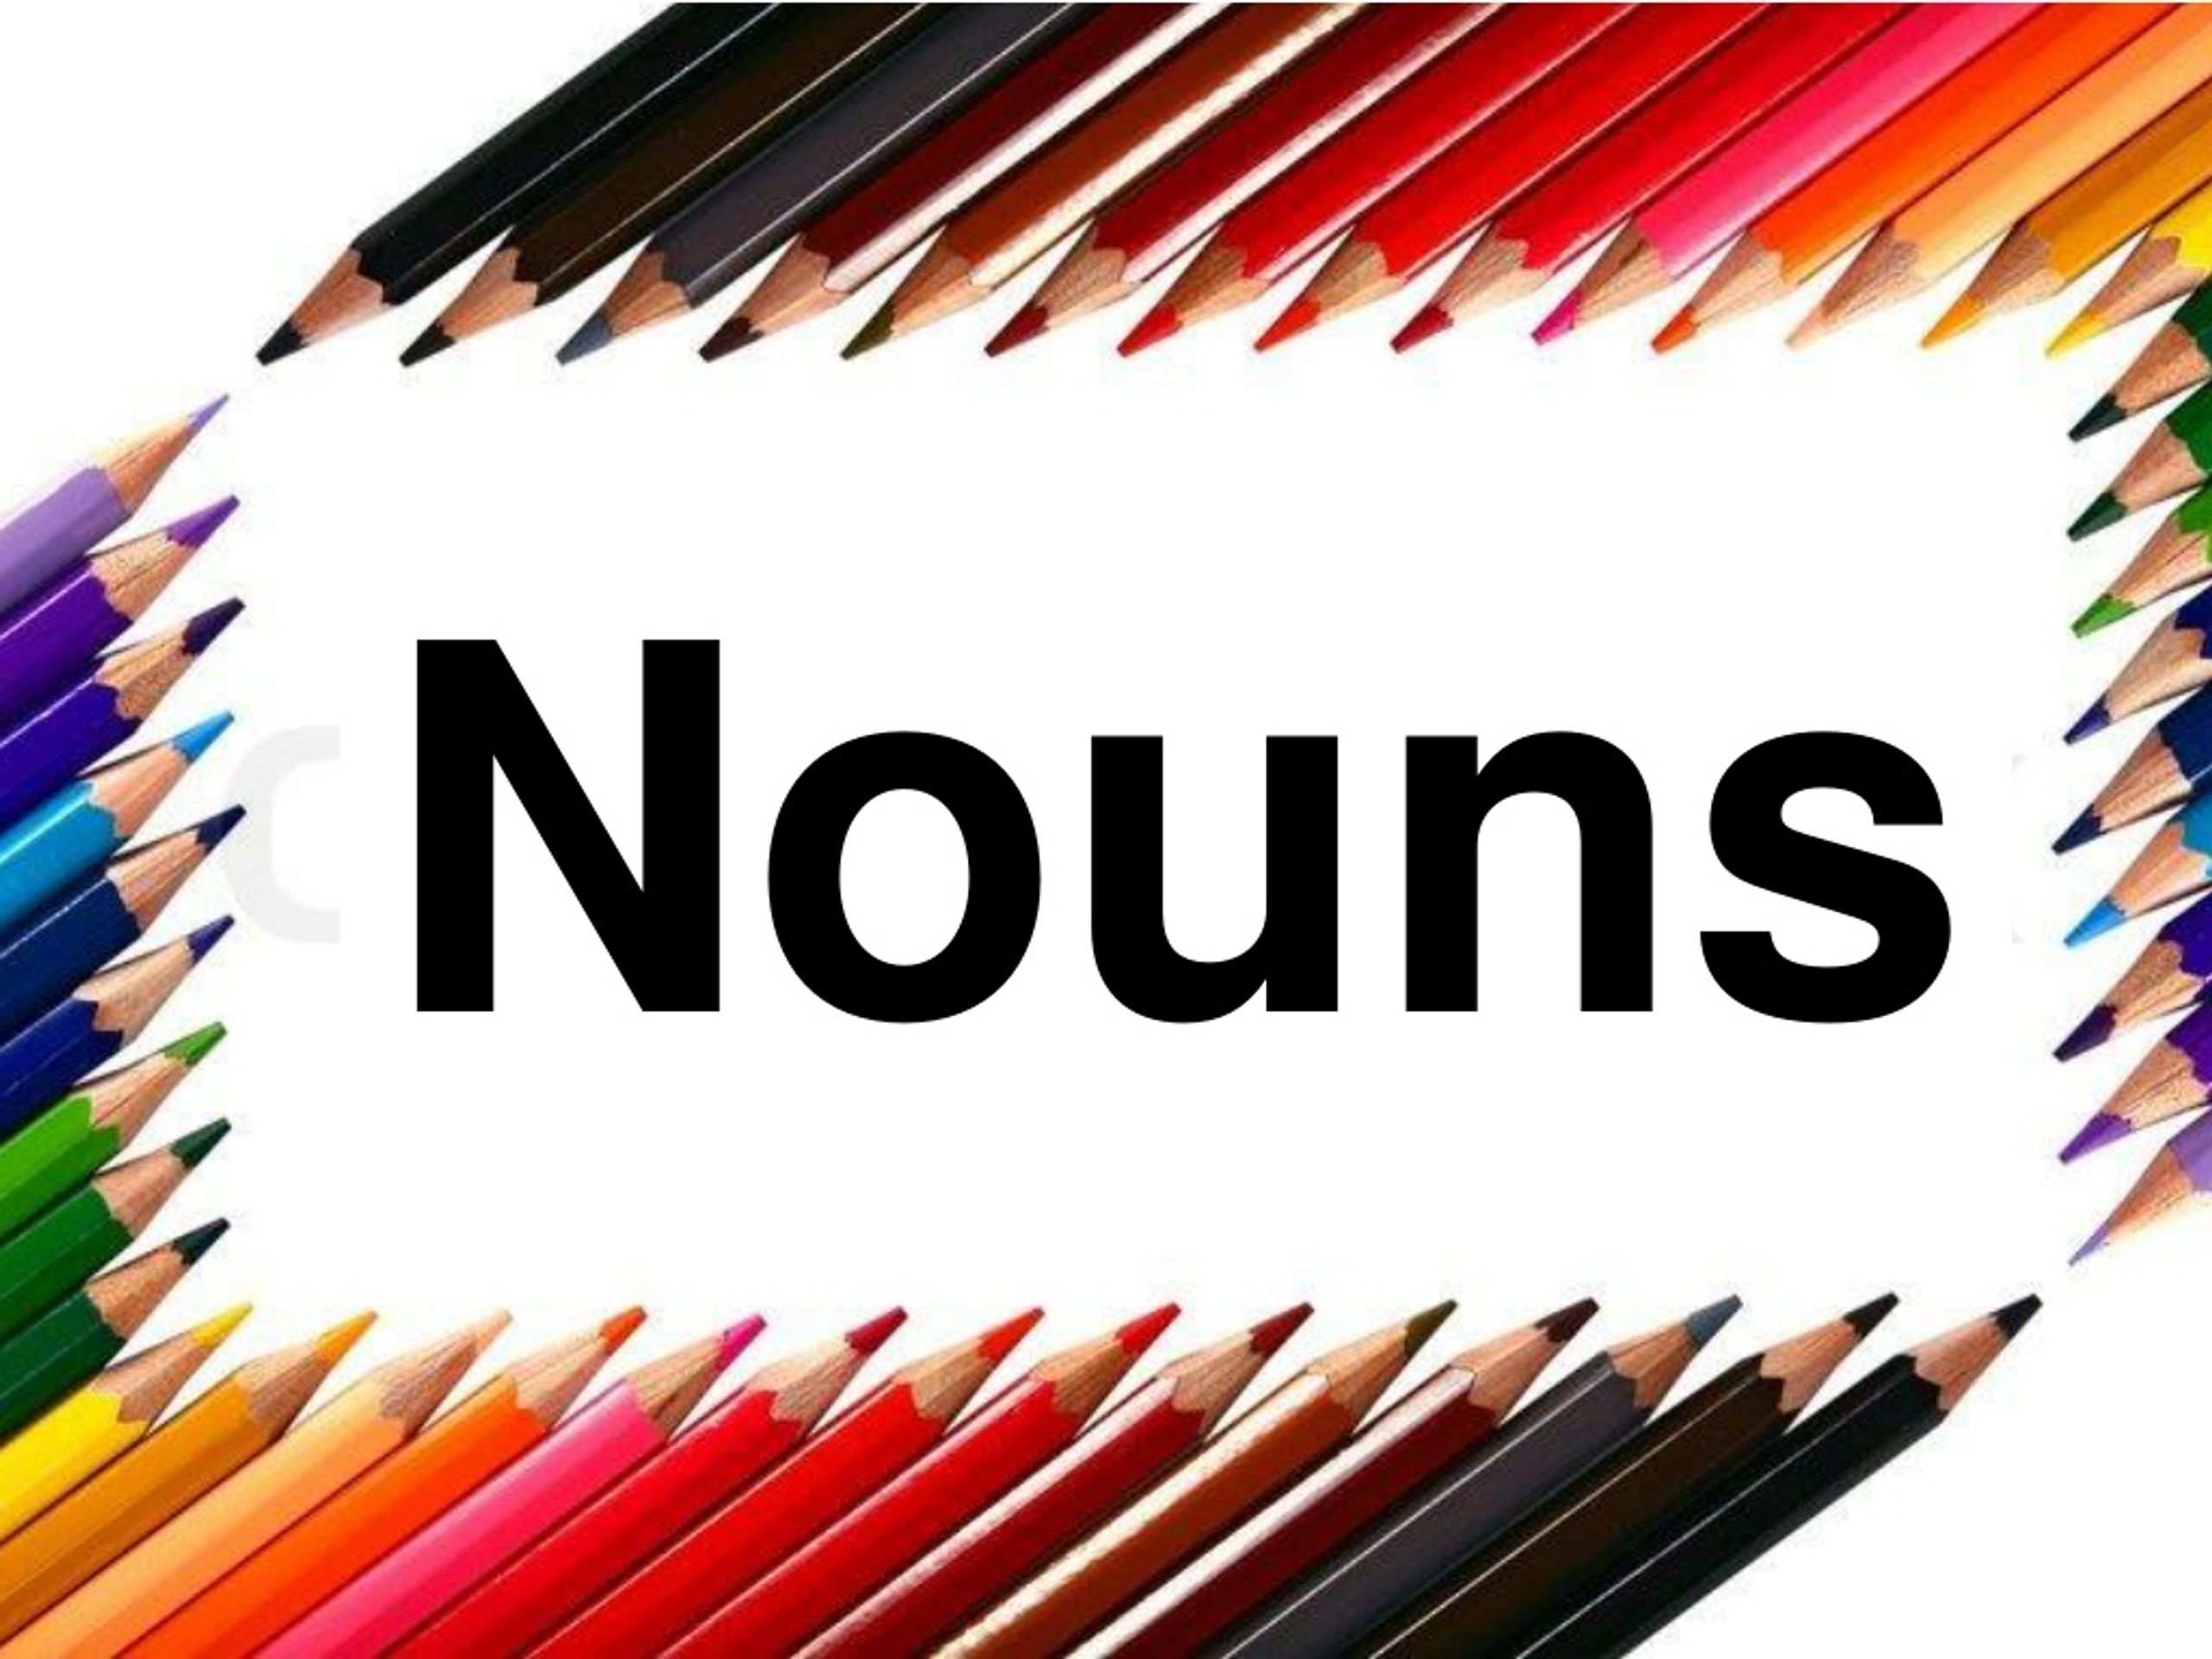 ppt presentation of noun